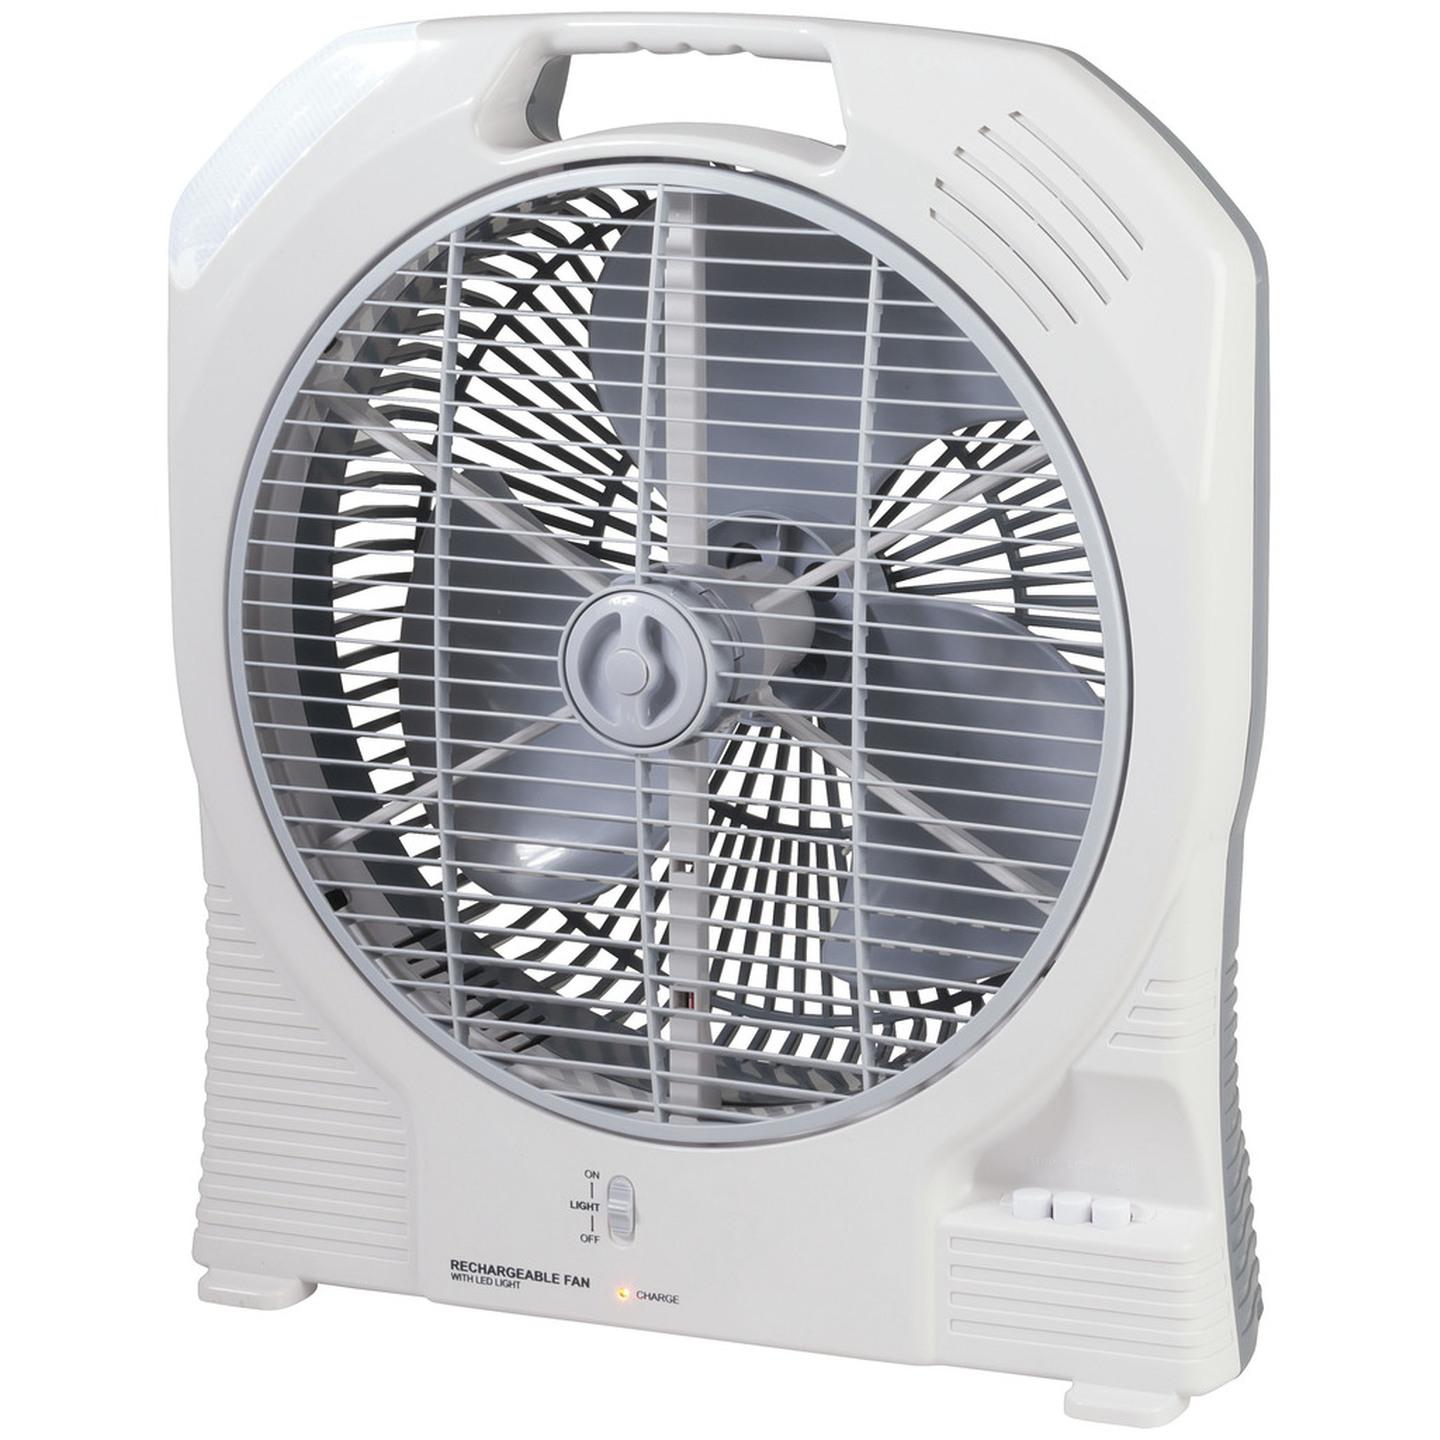 Katabat 14 Inch AC/12VDC Rechargeable Oscillating Fan